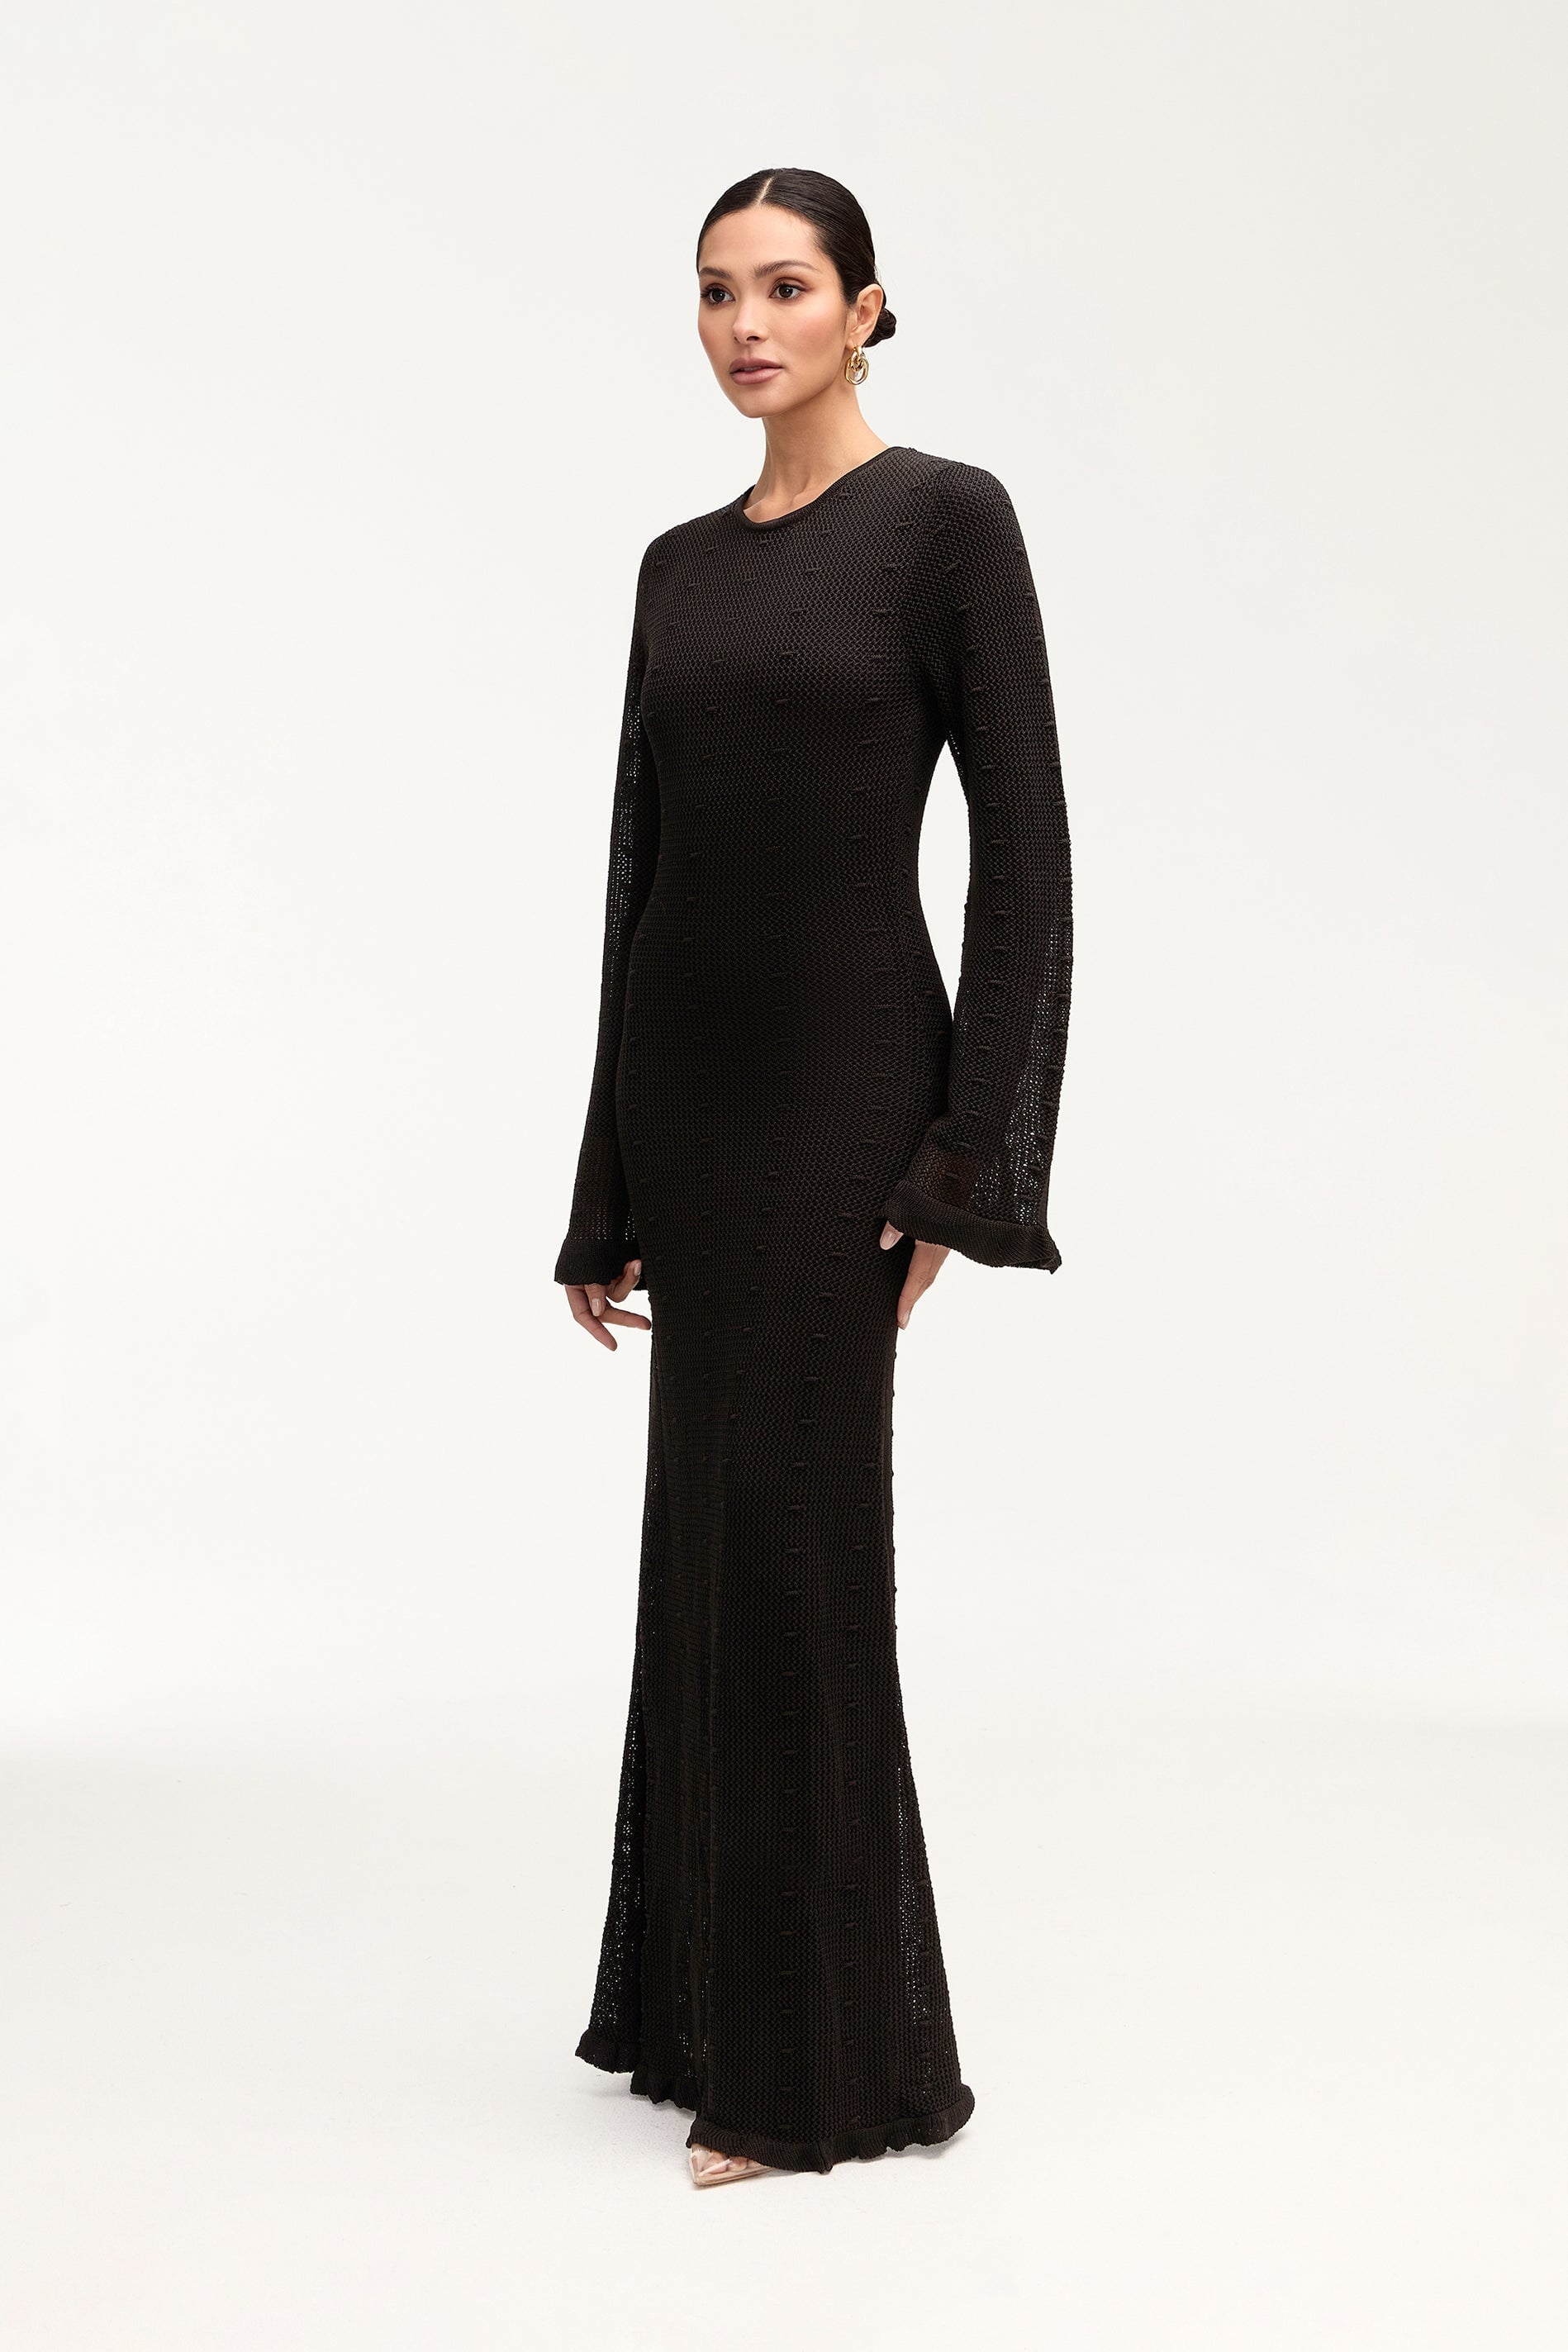 Leilani Crochet Maxi Dress - Black Clothing Veiled 